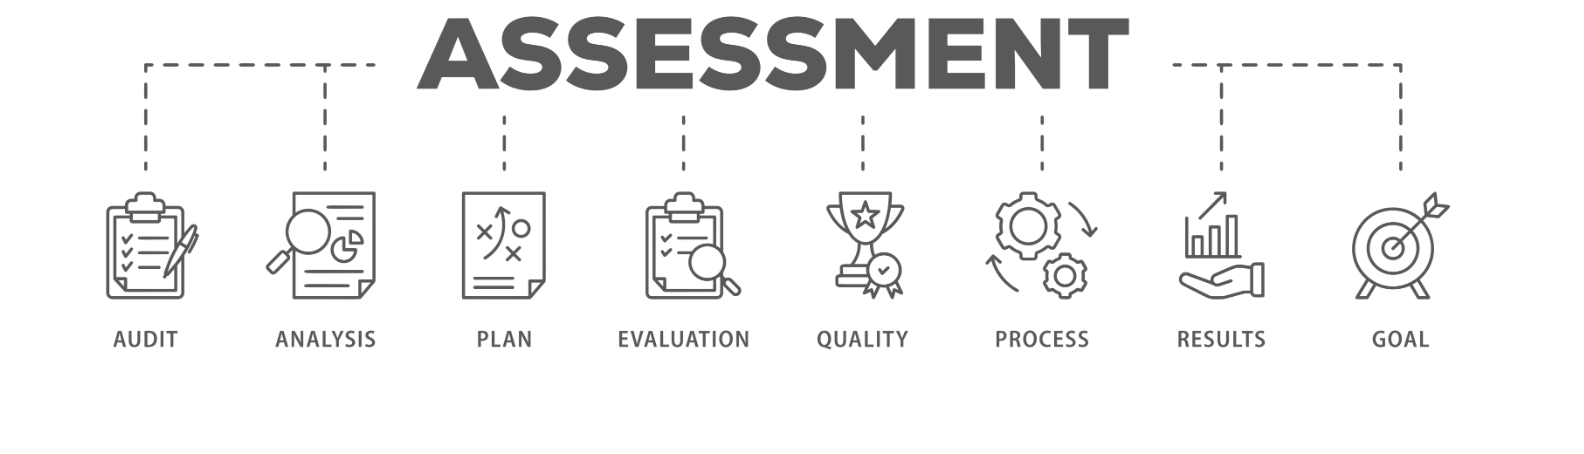 Operational_Effectiveness_Assessment.png